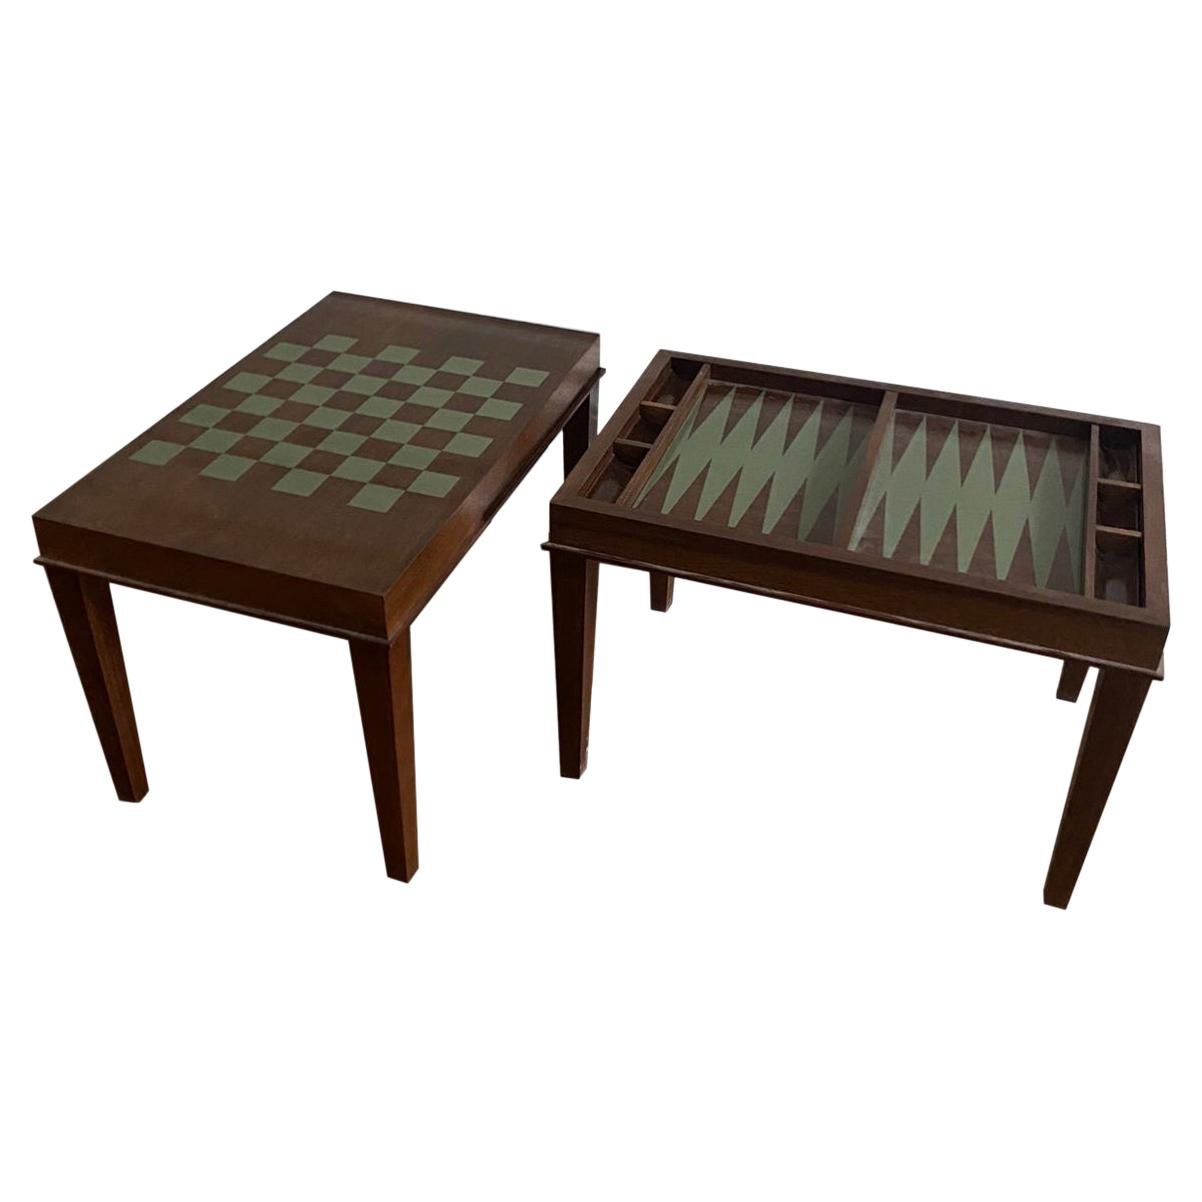 Tables d'échecs et de backgammon peintes